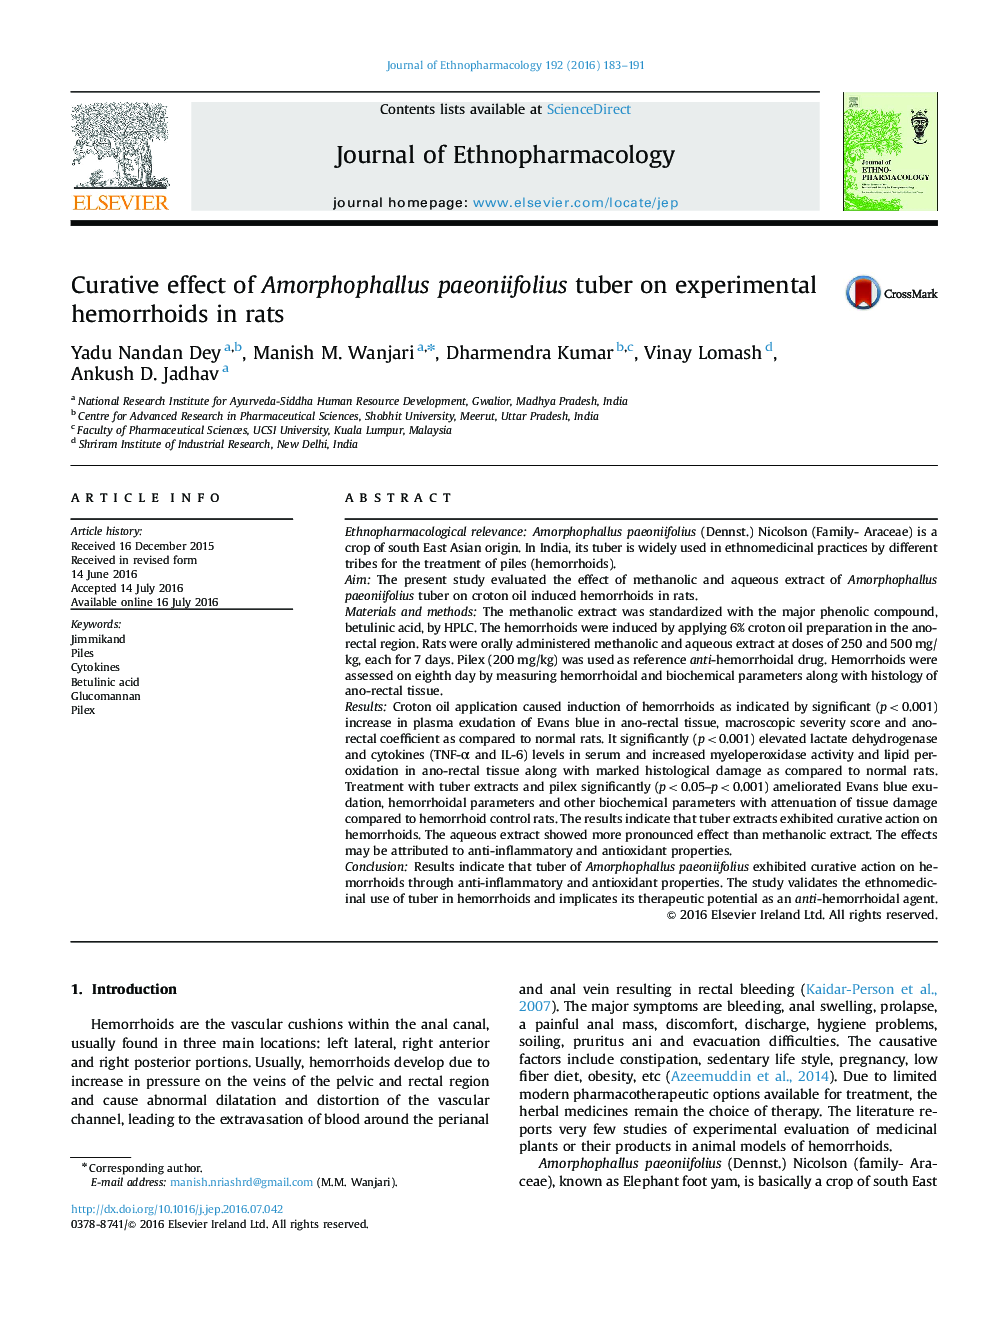 Curative effect of Amorphophallus paeoniifolius tuber on experimental hemorrhoids in rats